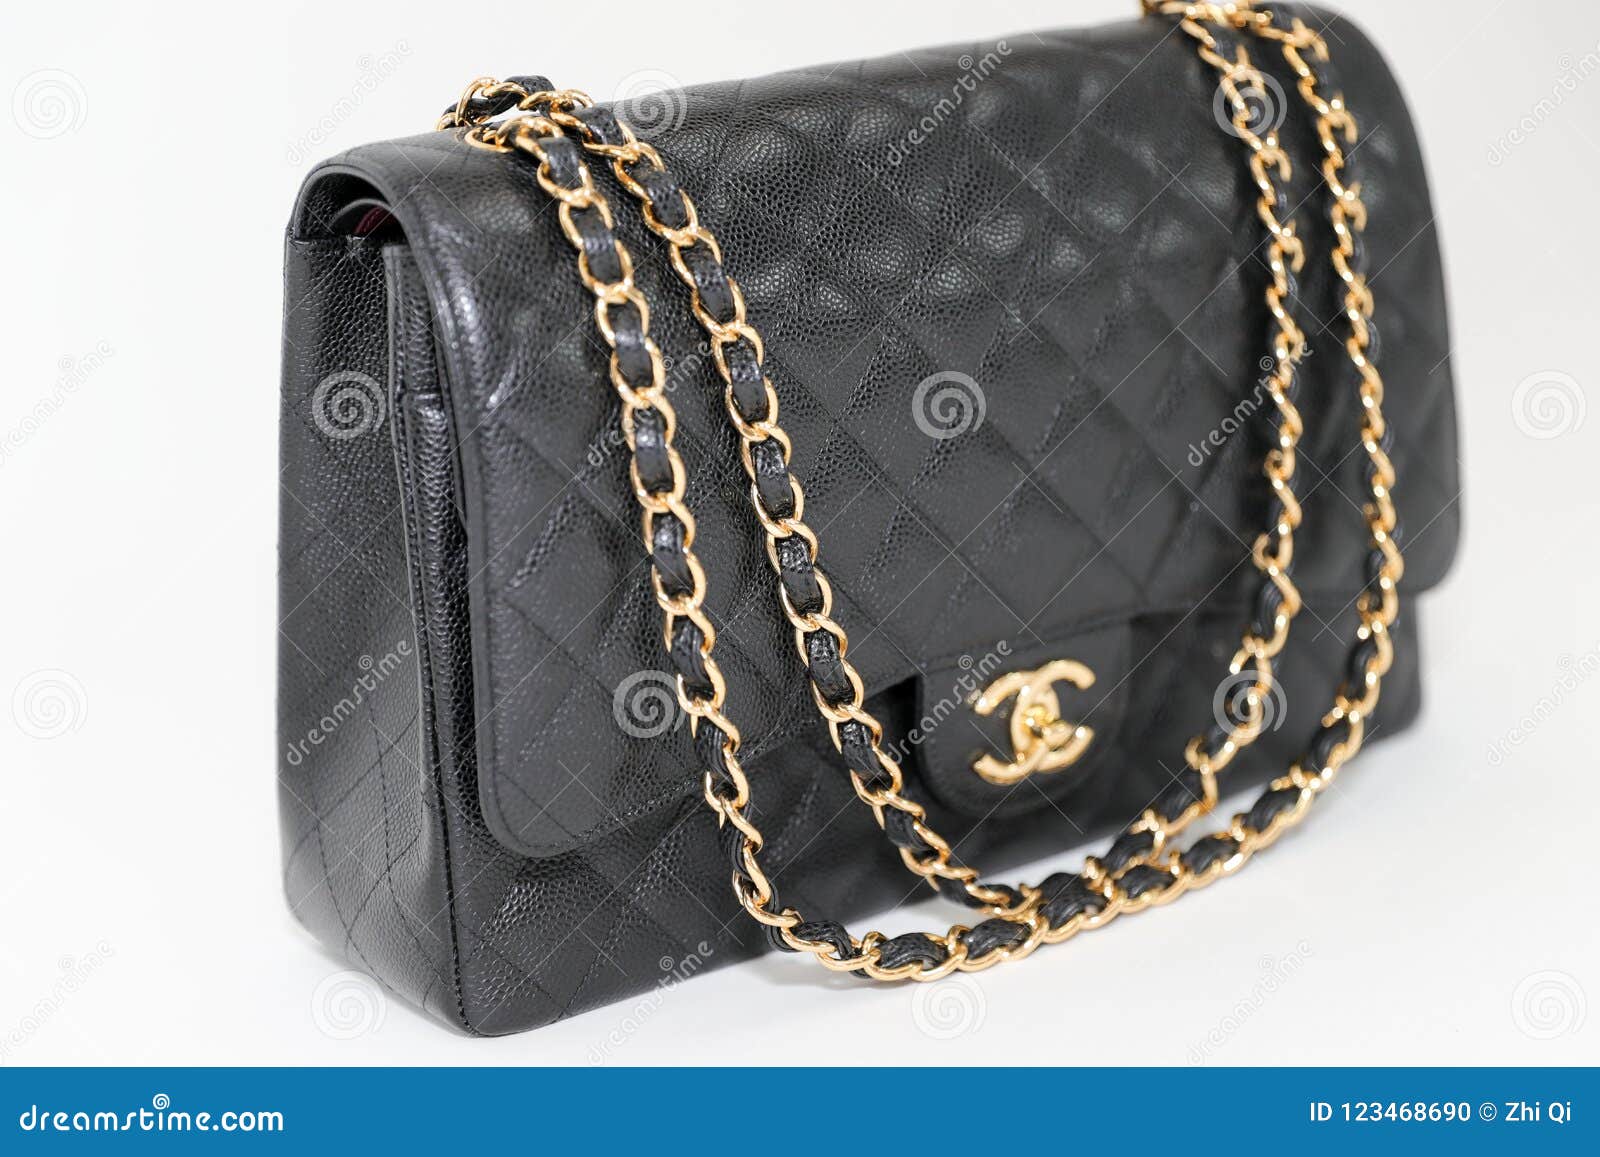 276 Chanel Handbag Stock Photos - Free & Royalty-Free Stock Photos from  Dreamstime